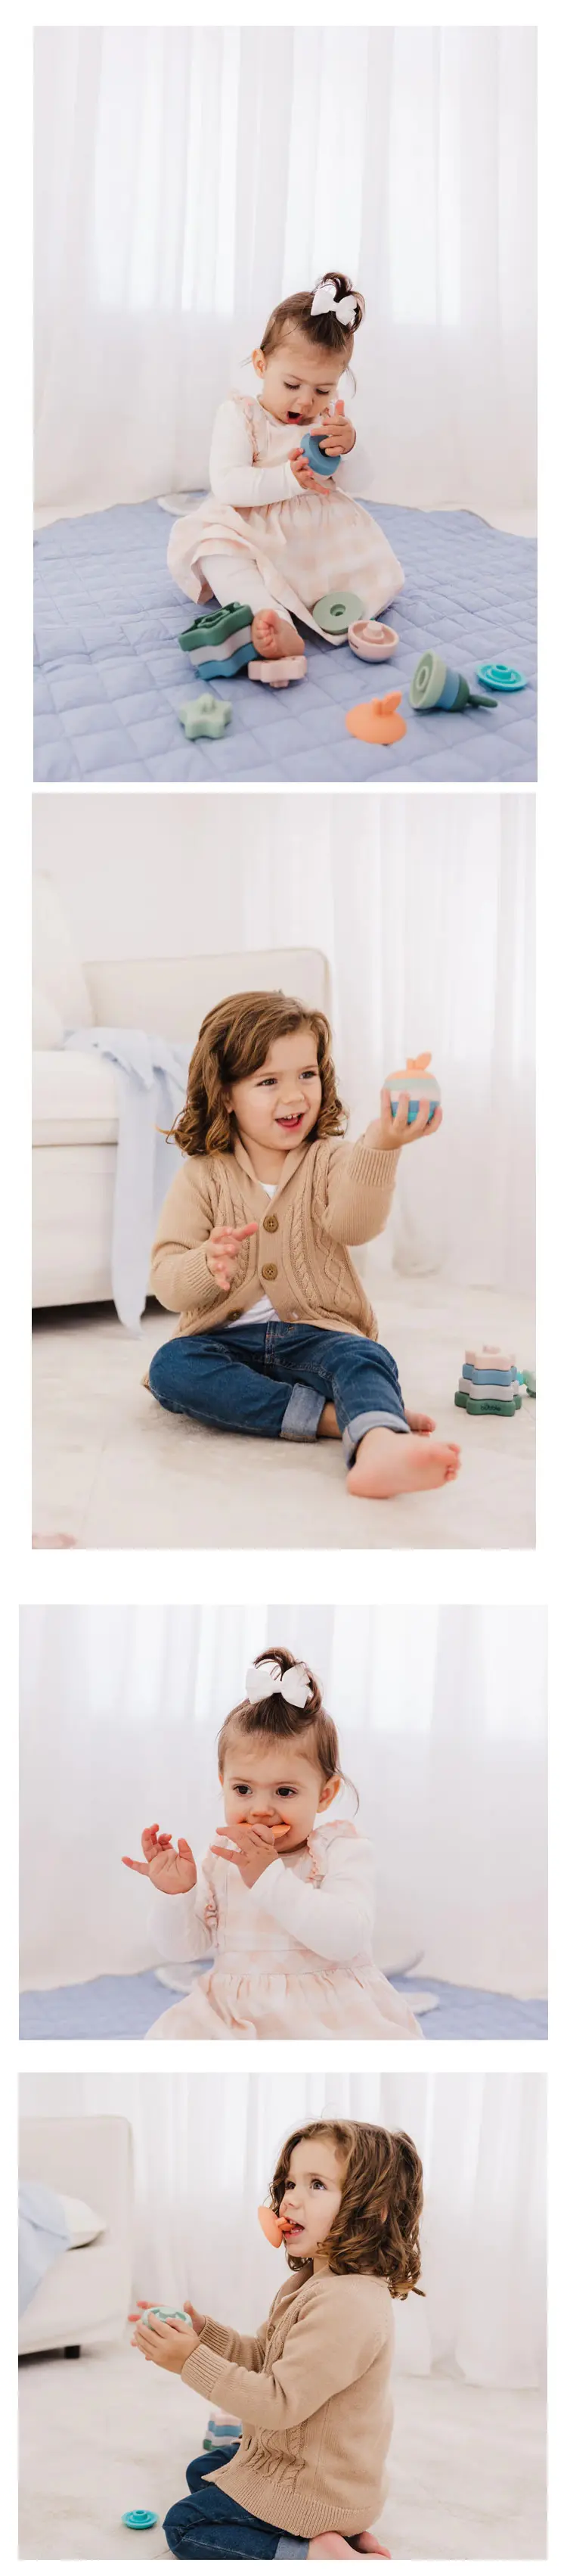 Bubble 全矽胶牙胶堆叠玩具-苹果型